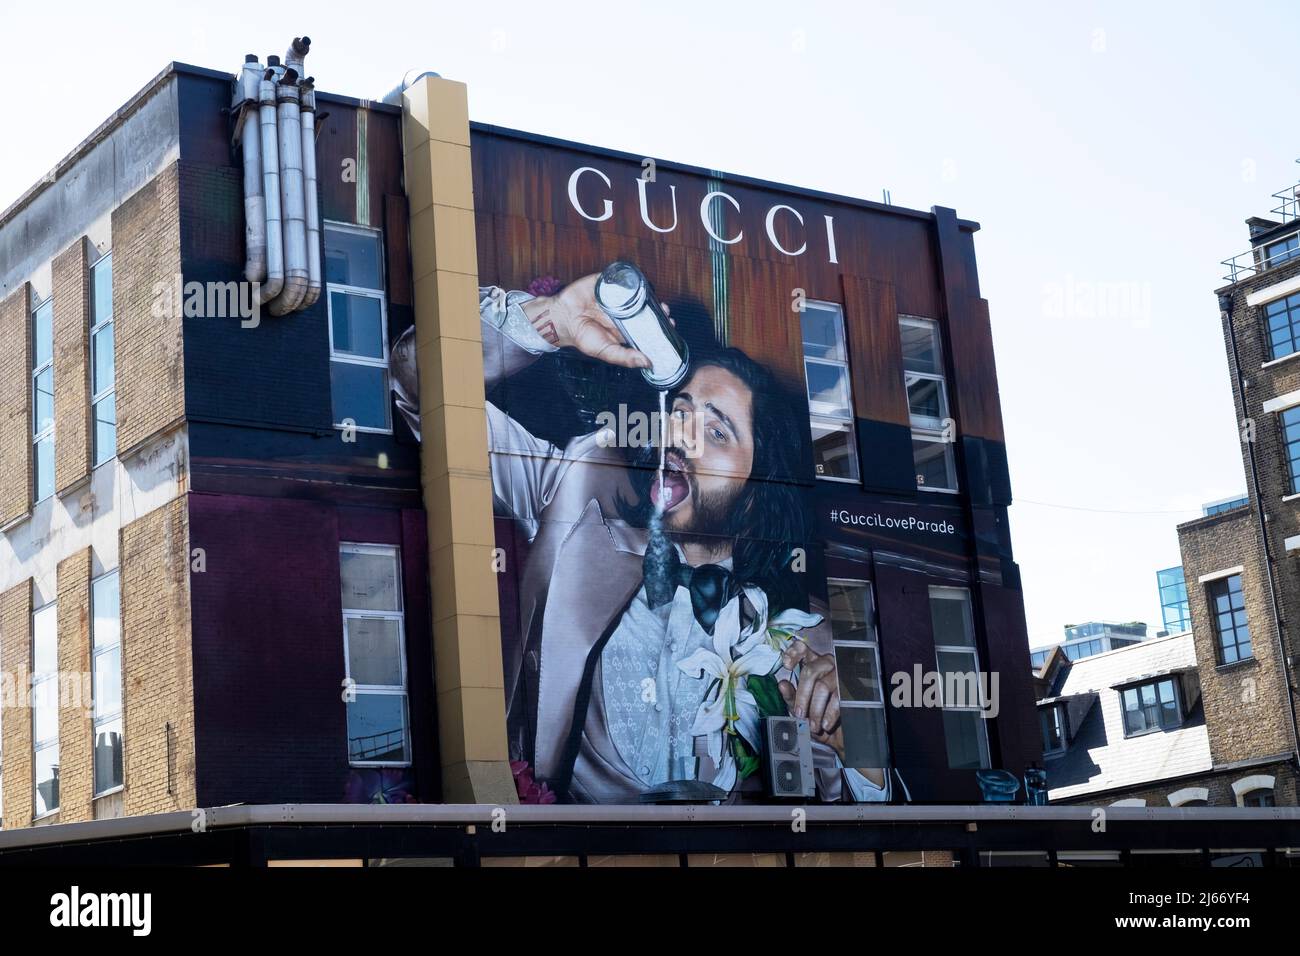 Gucci wandbild east london -Fotos und -Bildmaterial in hoher Auflösung –  Alamy